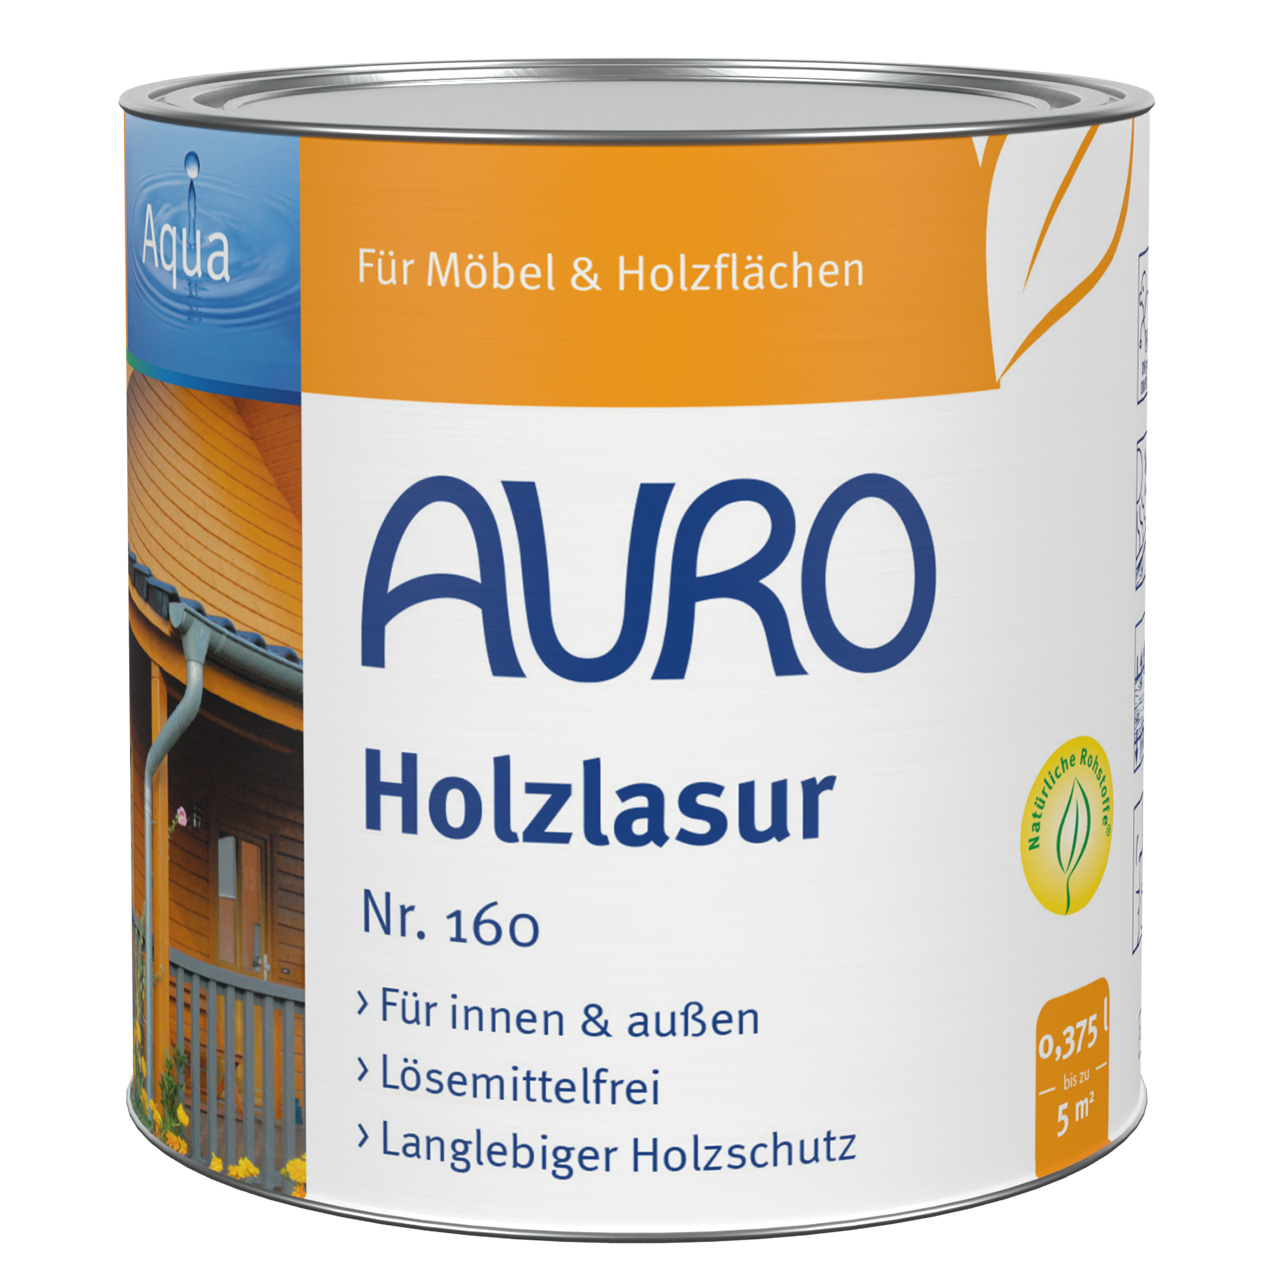 AURO Holzlasur Aqua Nr. 160